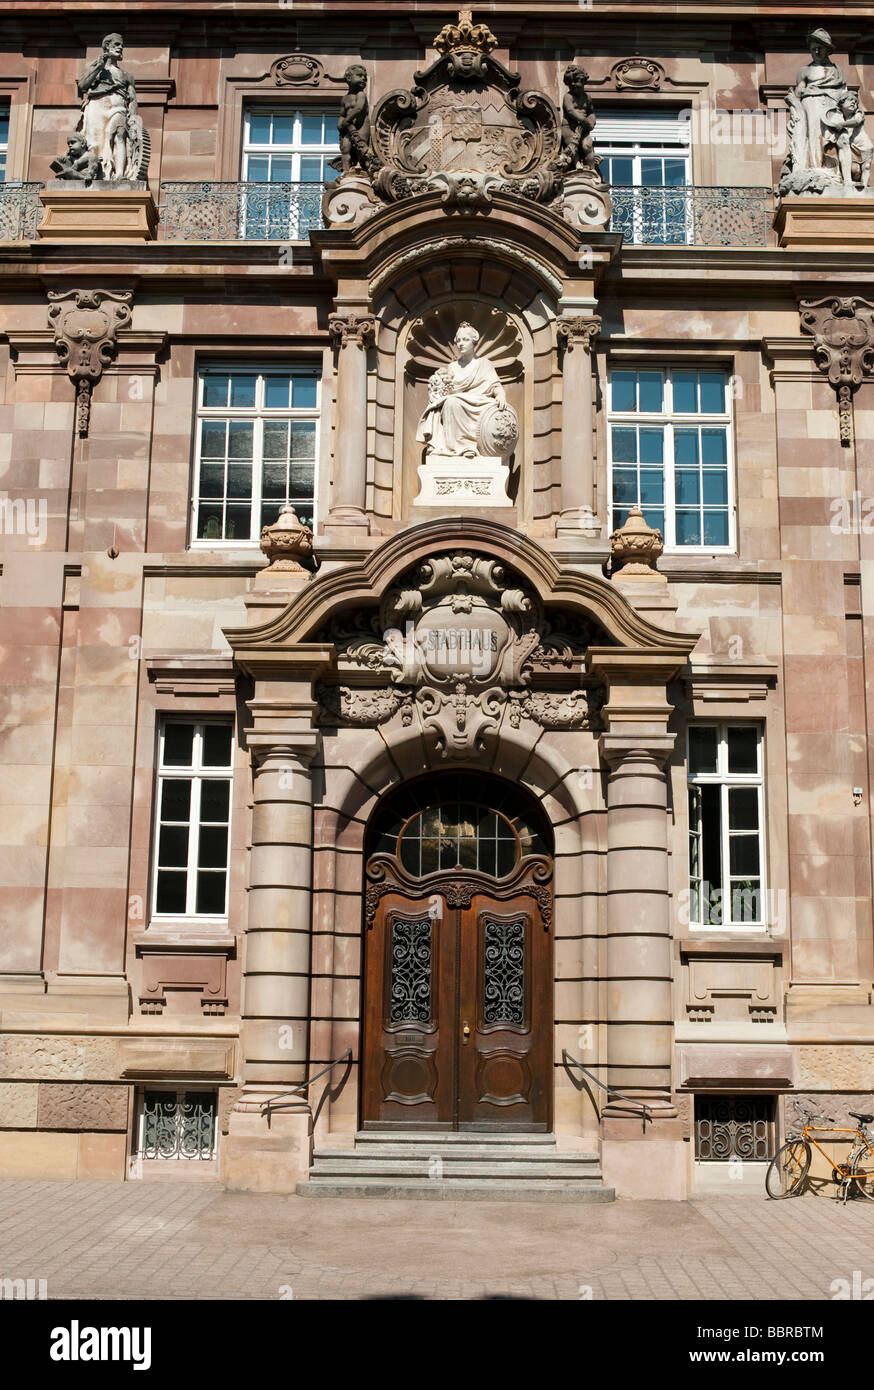 City house, city administration building with Mayor's office, Speyer, Rhineland-Palatinate, Germany, Europe Stock Photo